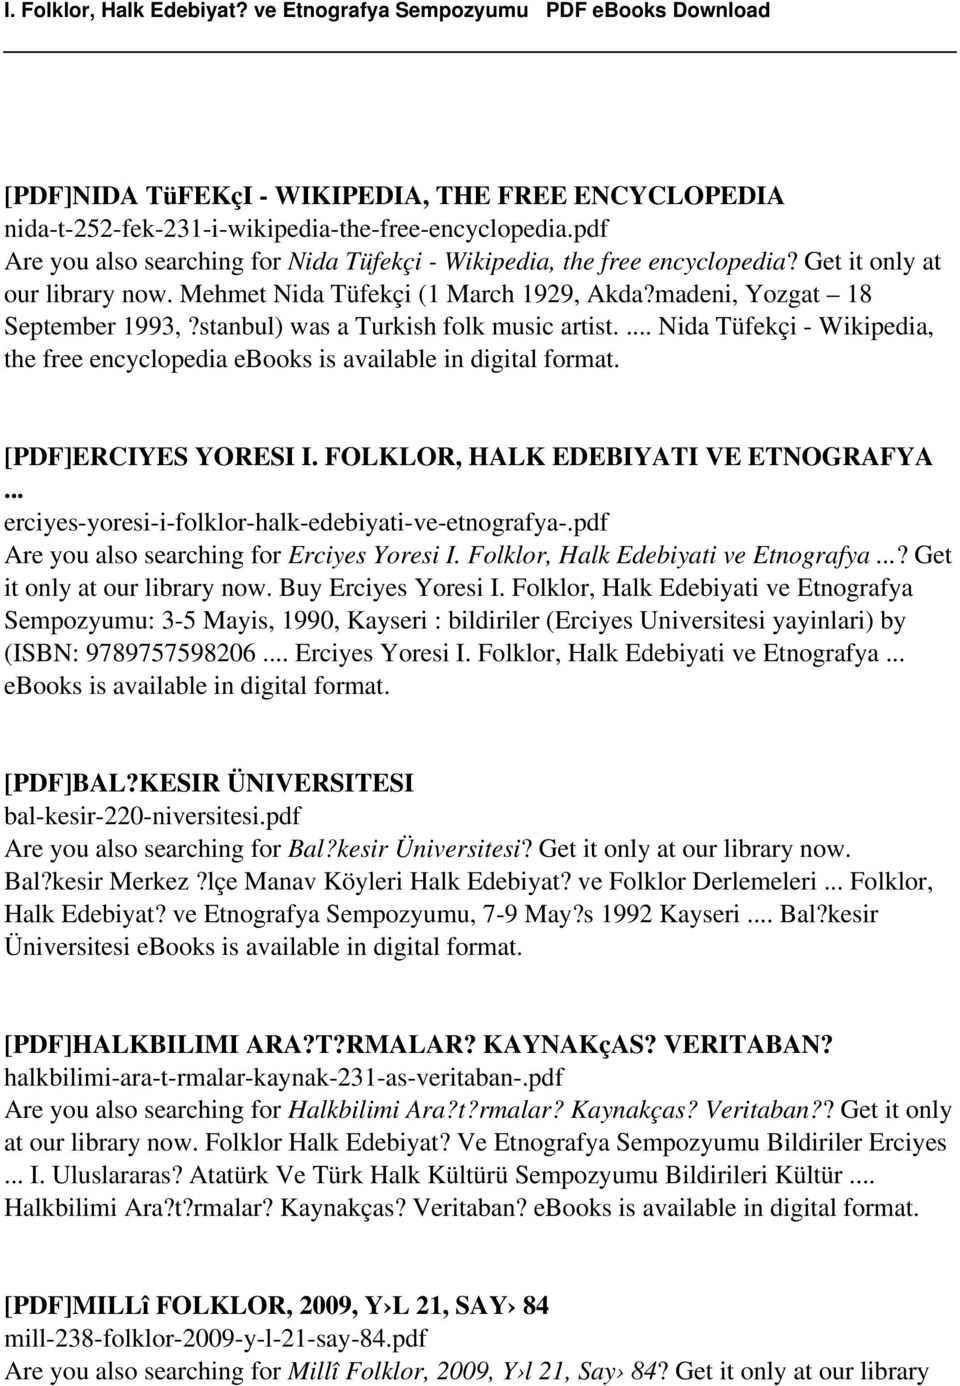 ... Nida Tüfekçi - Wikipedia, the free encyclopedia ebooks is [PDF]ERCIYES YORESI I. FOLKLOR, HALK EDEBIYATI VE ETNOGRAFYA... erciyes-yoresi-i-folklor-halk-edebiyati-ve-etnografya-.